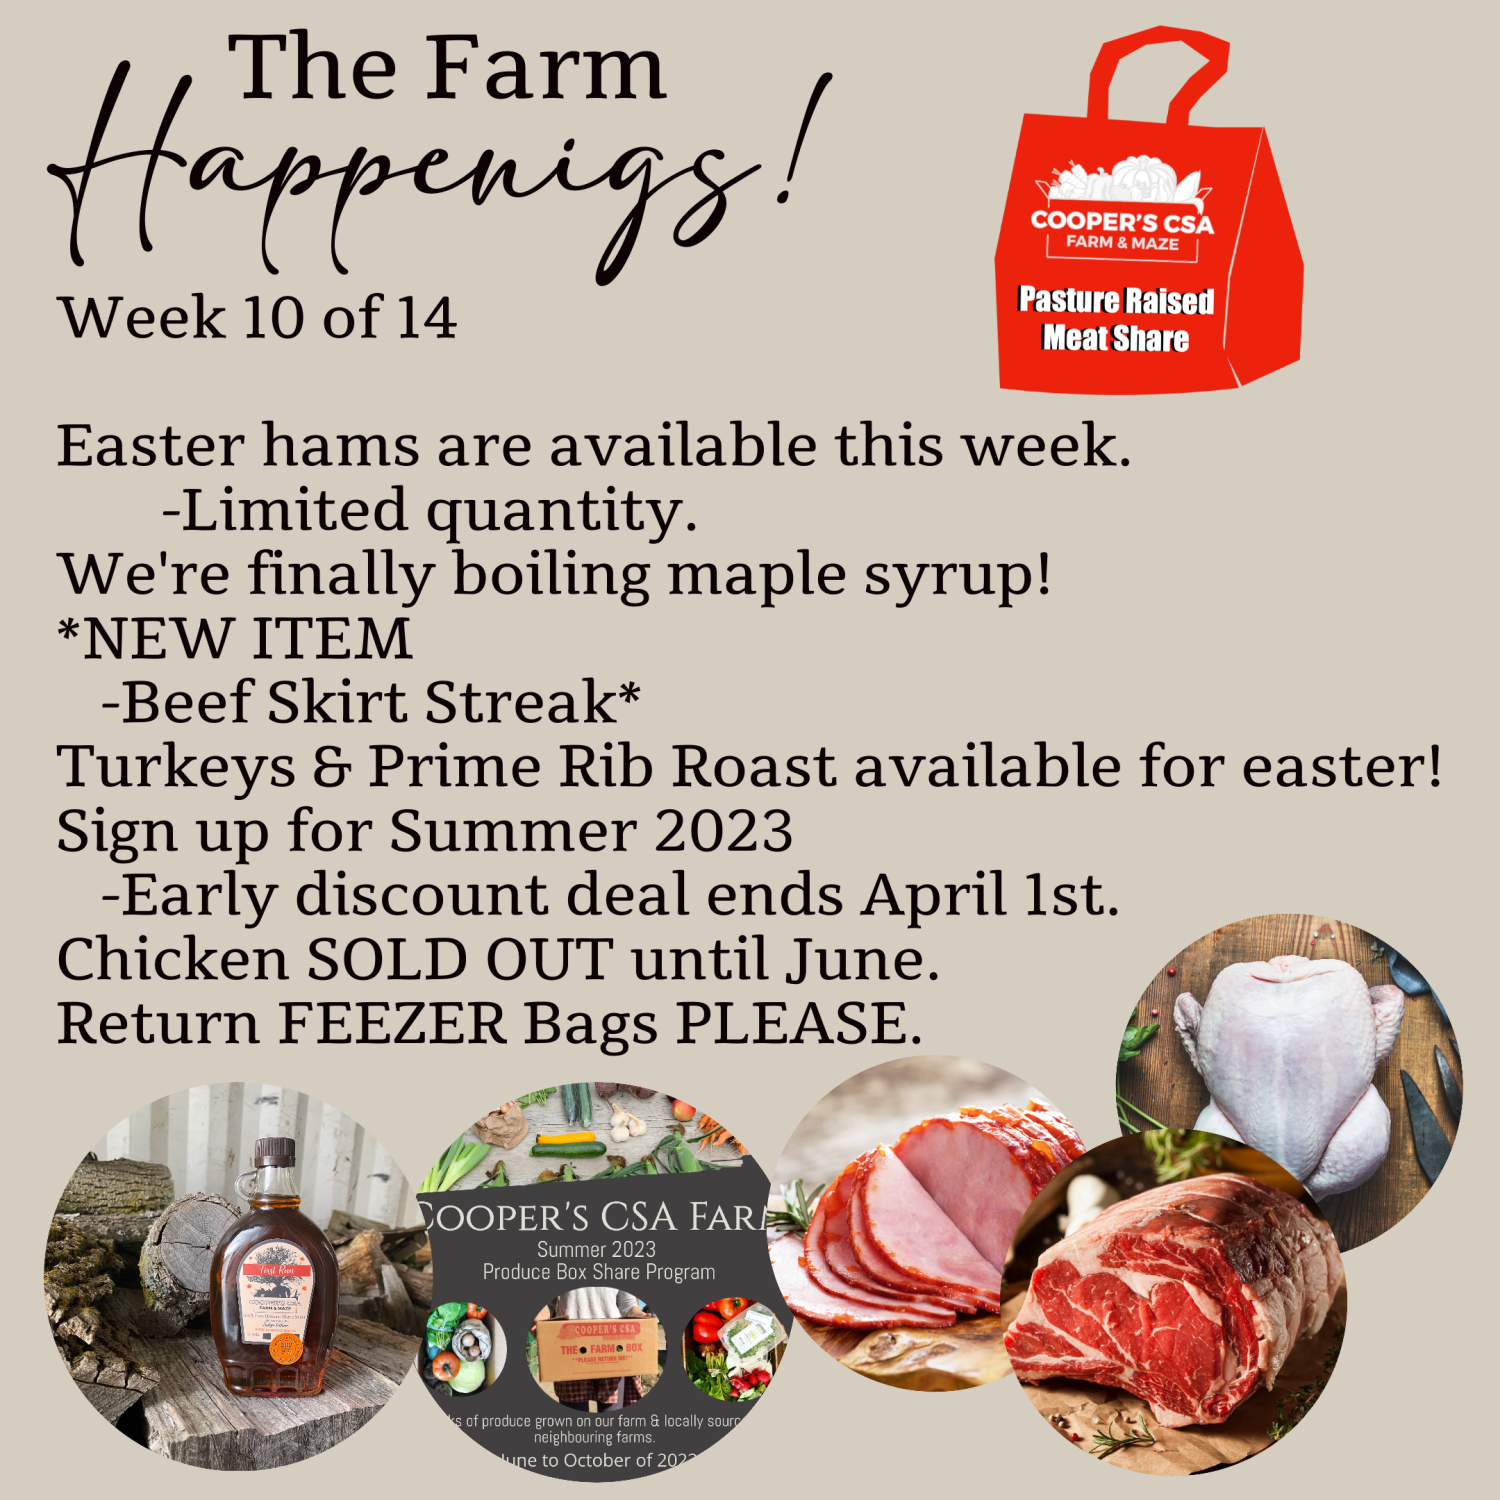 Next Happening: "Pasture Meat Shares"-Coopers CSA Farm Farm Happenings Week 10"